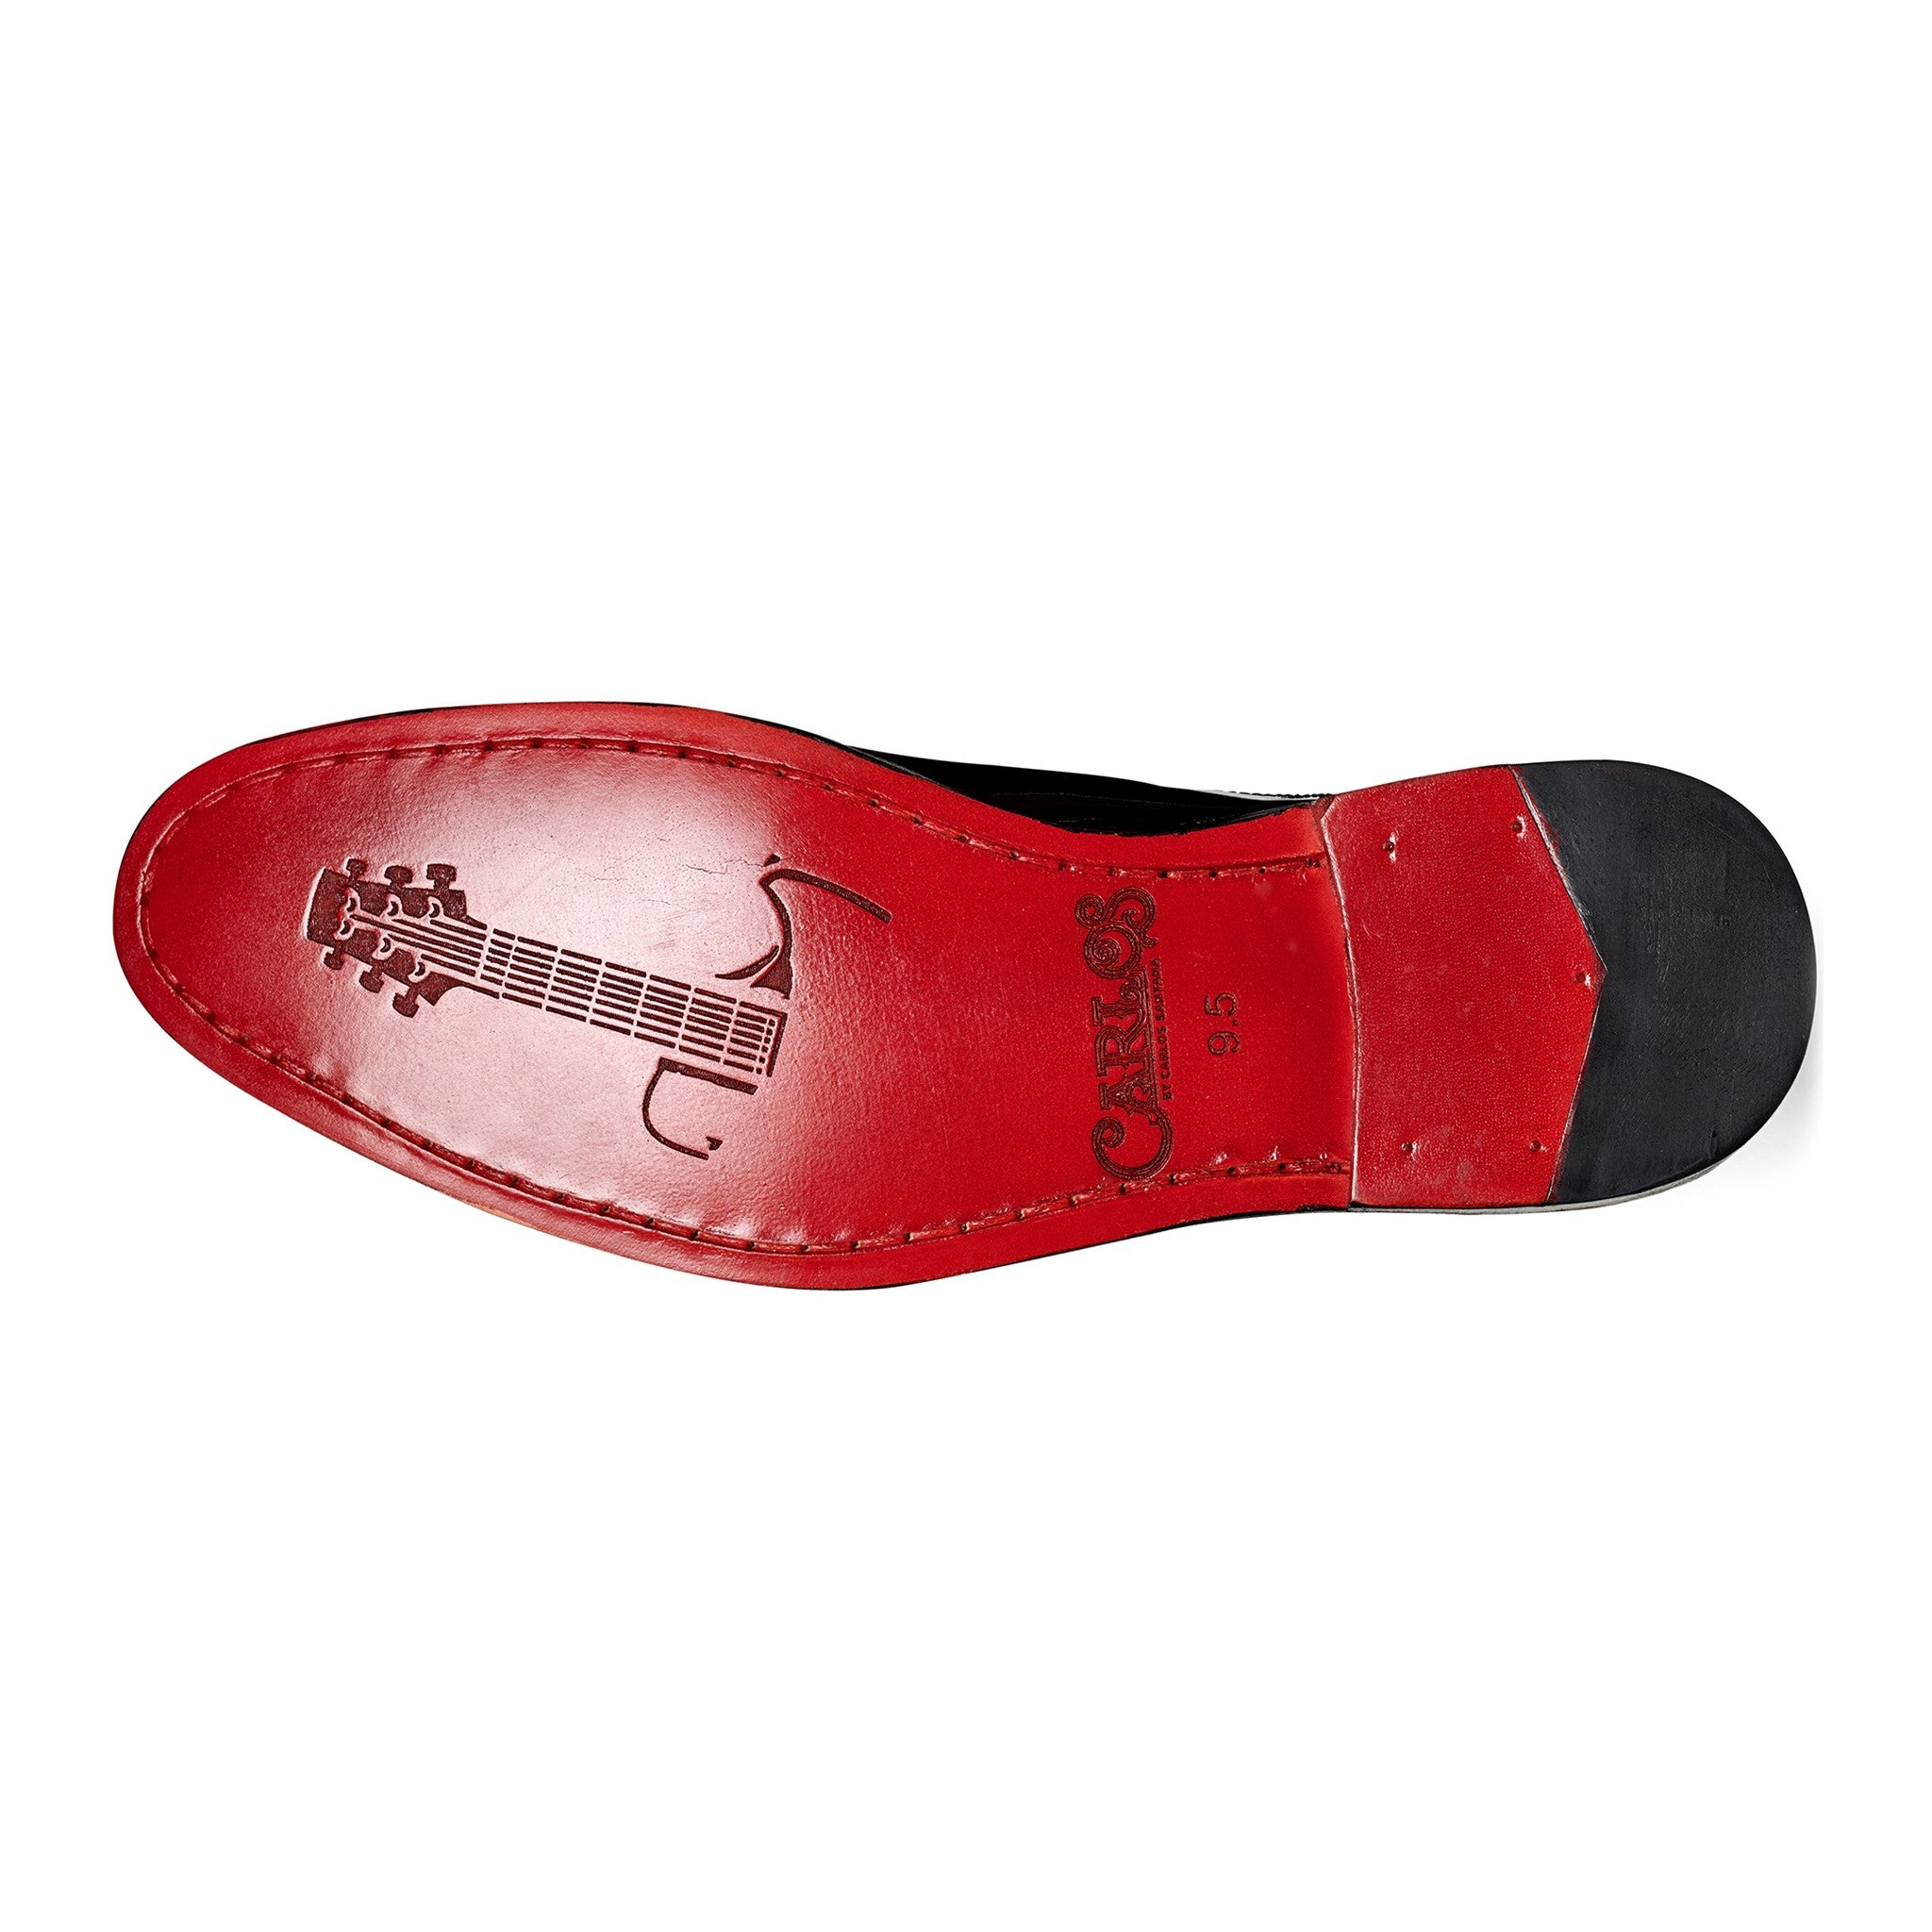 Tuxedo Cap-toe Oxford - Carlos Santana Shoes